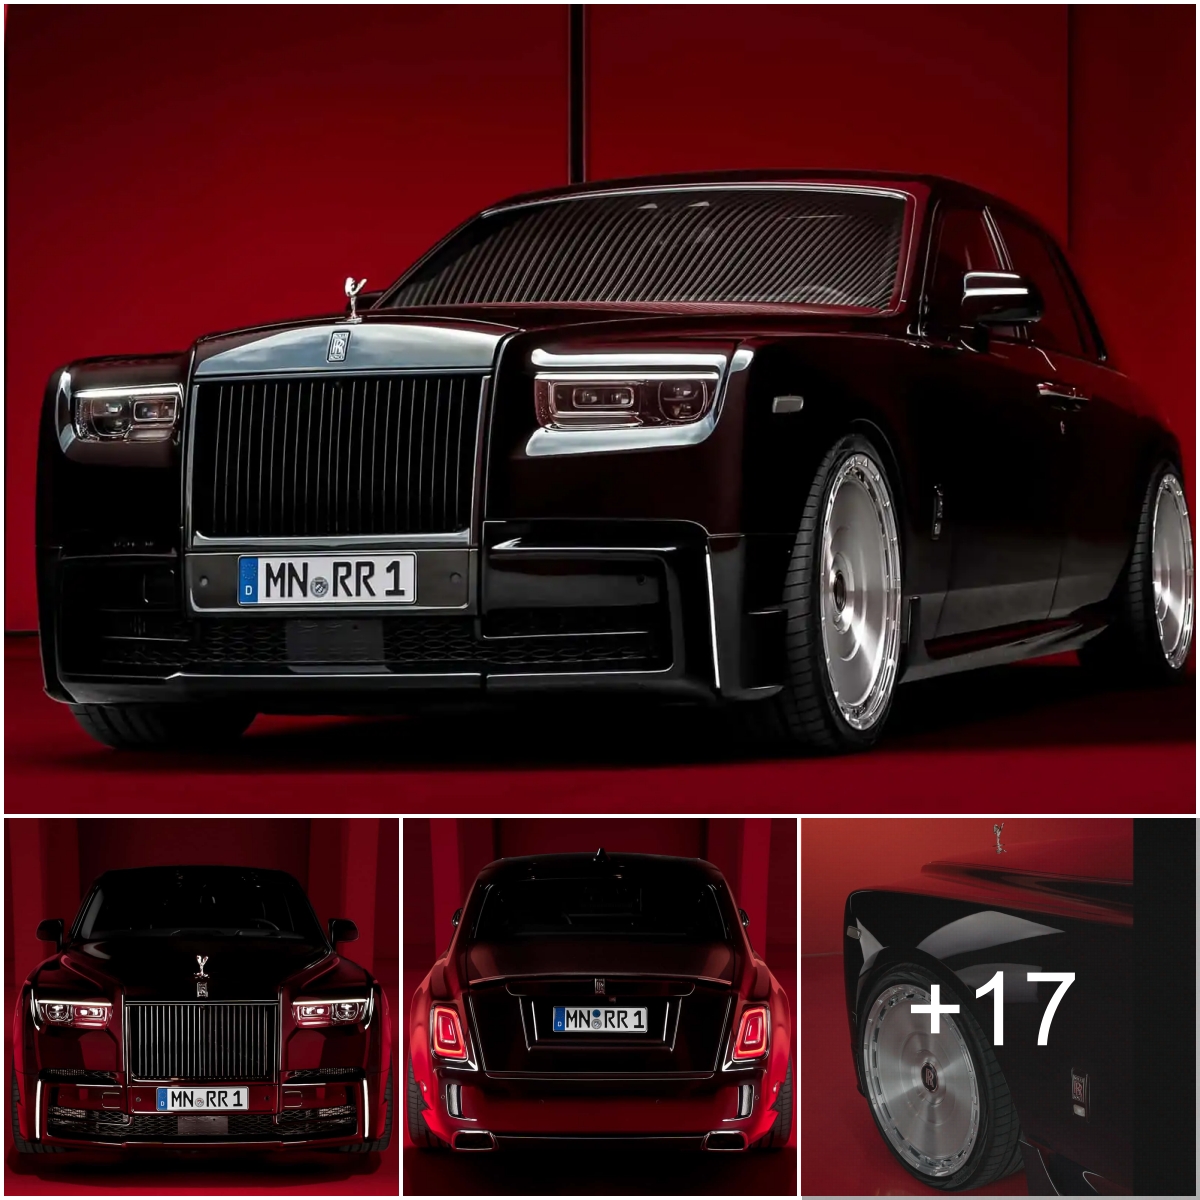 Unleashing Power and Elegance: The Rolls-Royce Phantom by Spofec